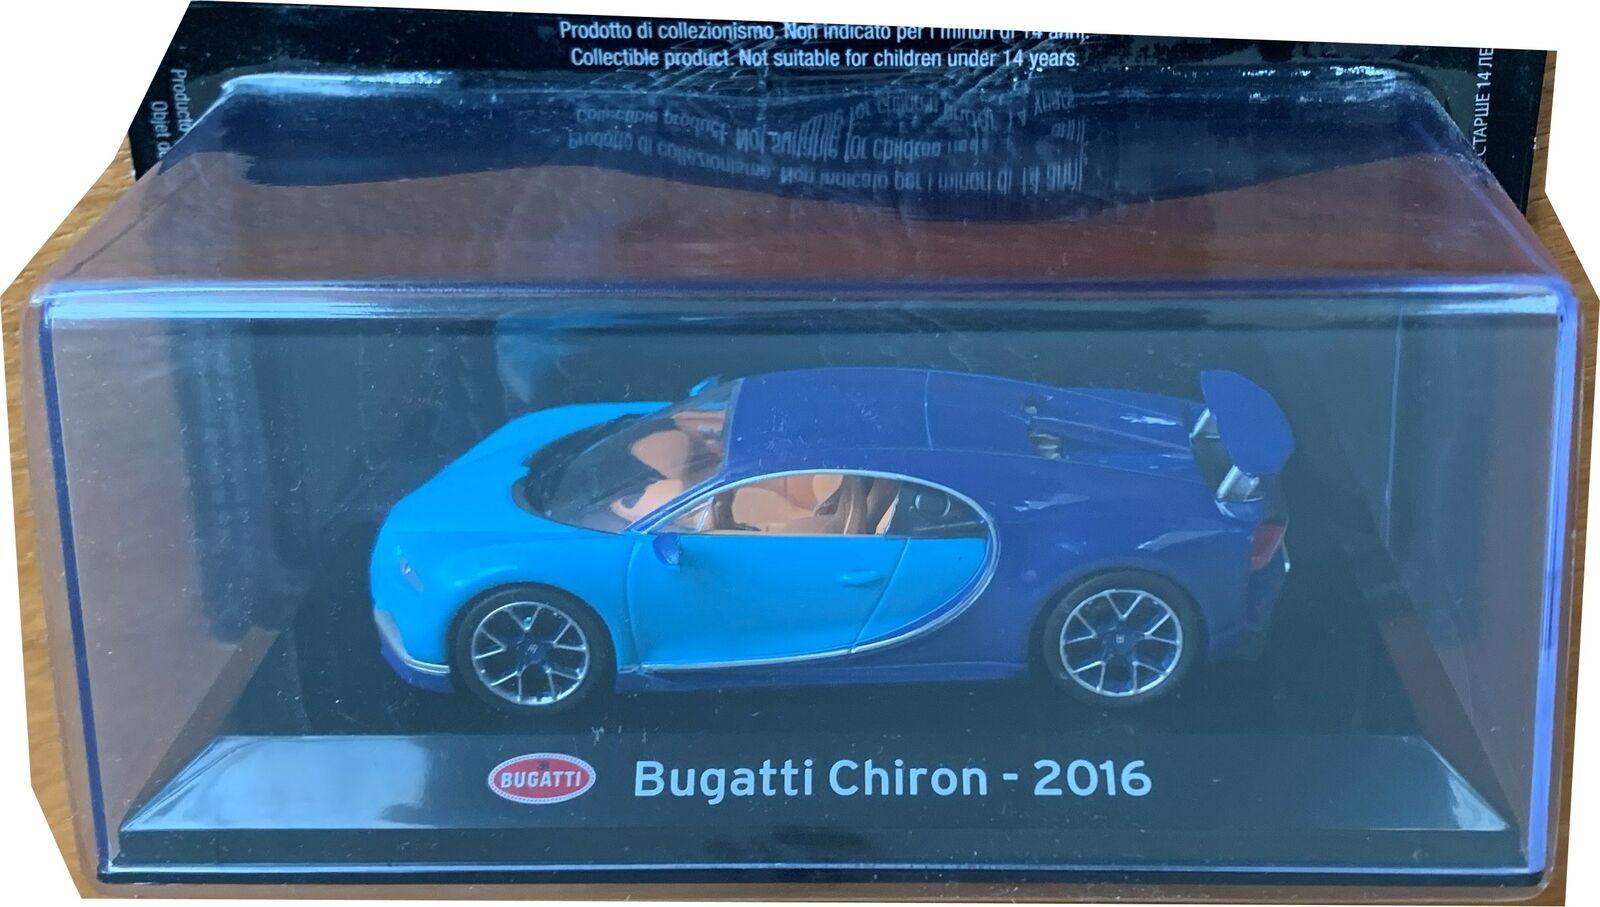 Bugatti Chiron 2016 in light and dark blue 1:43 scale diecast model sports car